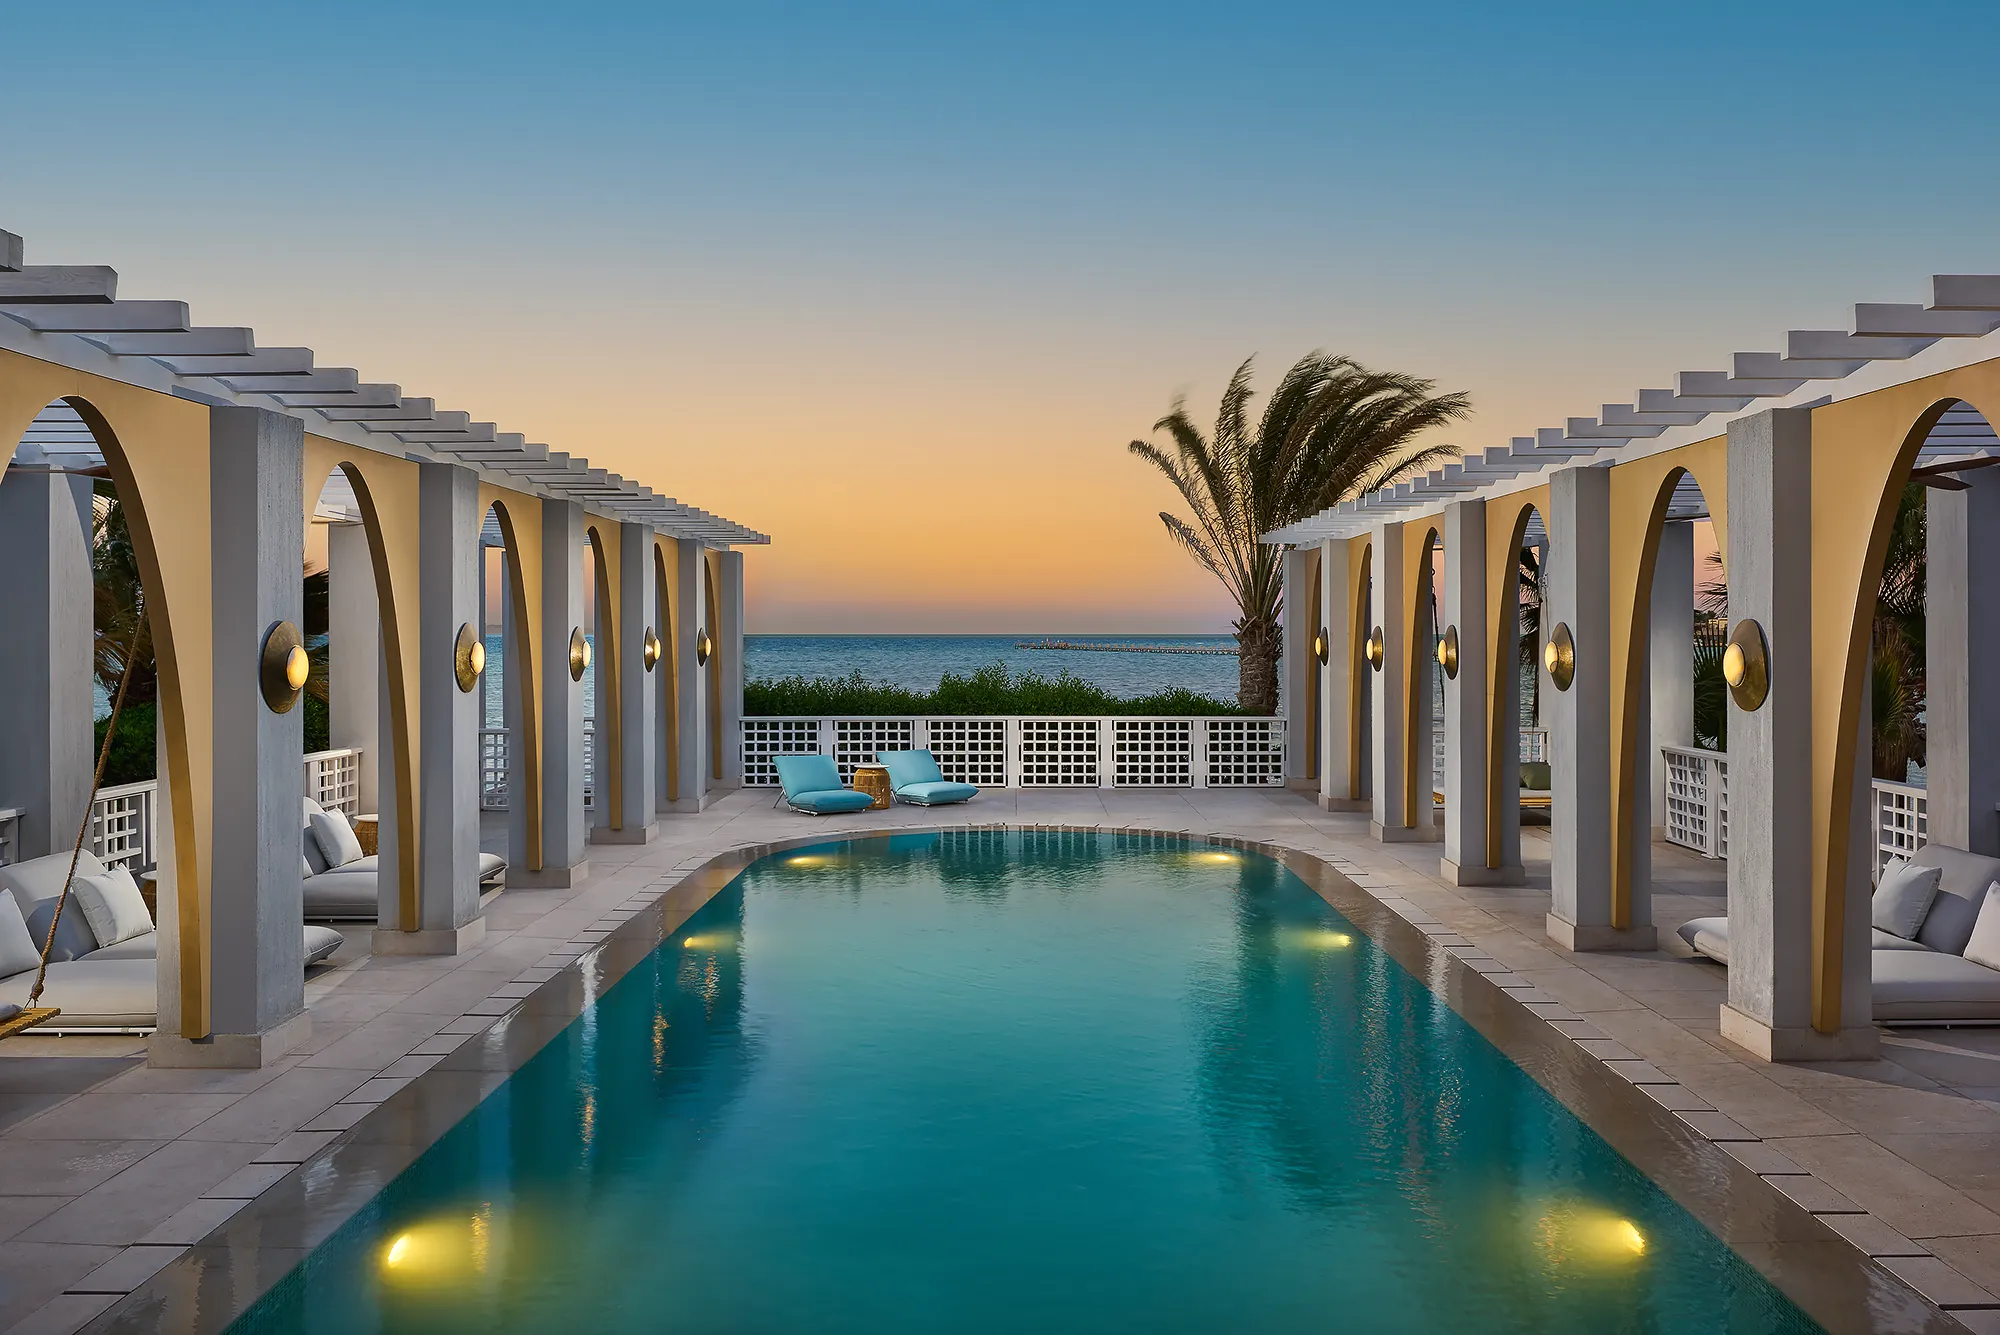 Sheraton Miramar palace pool - Mohamed Abdel-Hady commercial hospitality photographer - Egypt